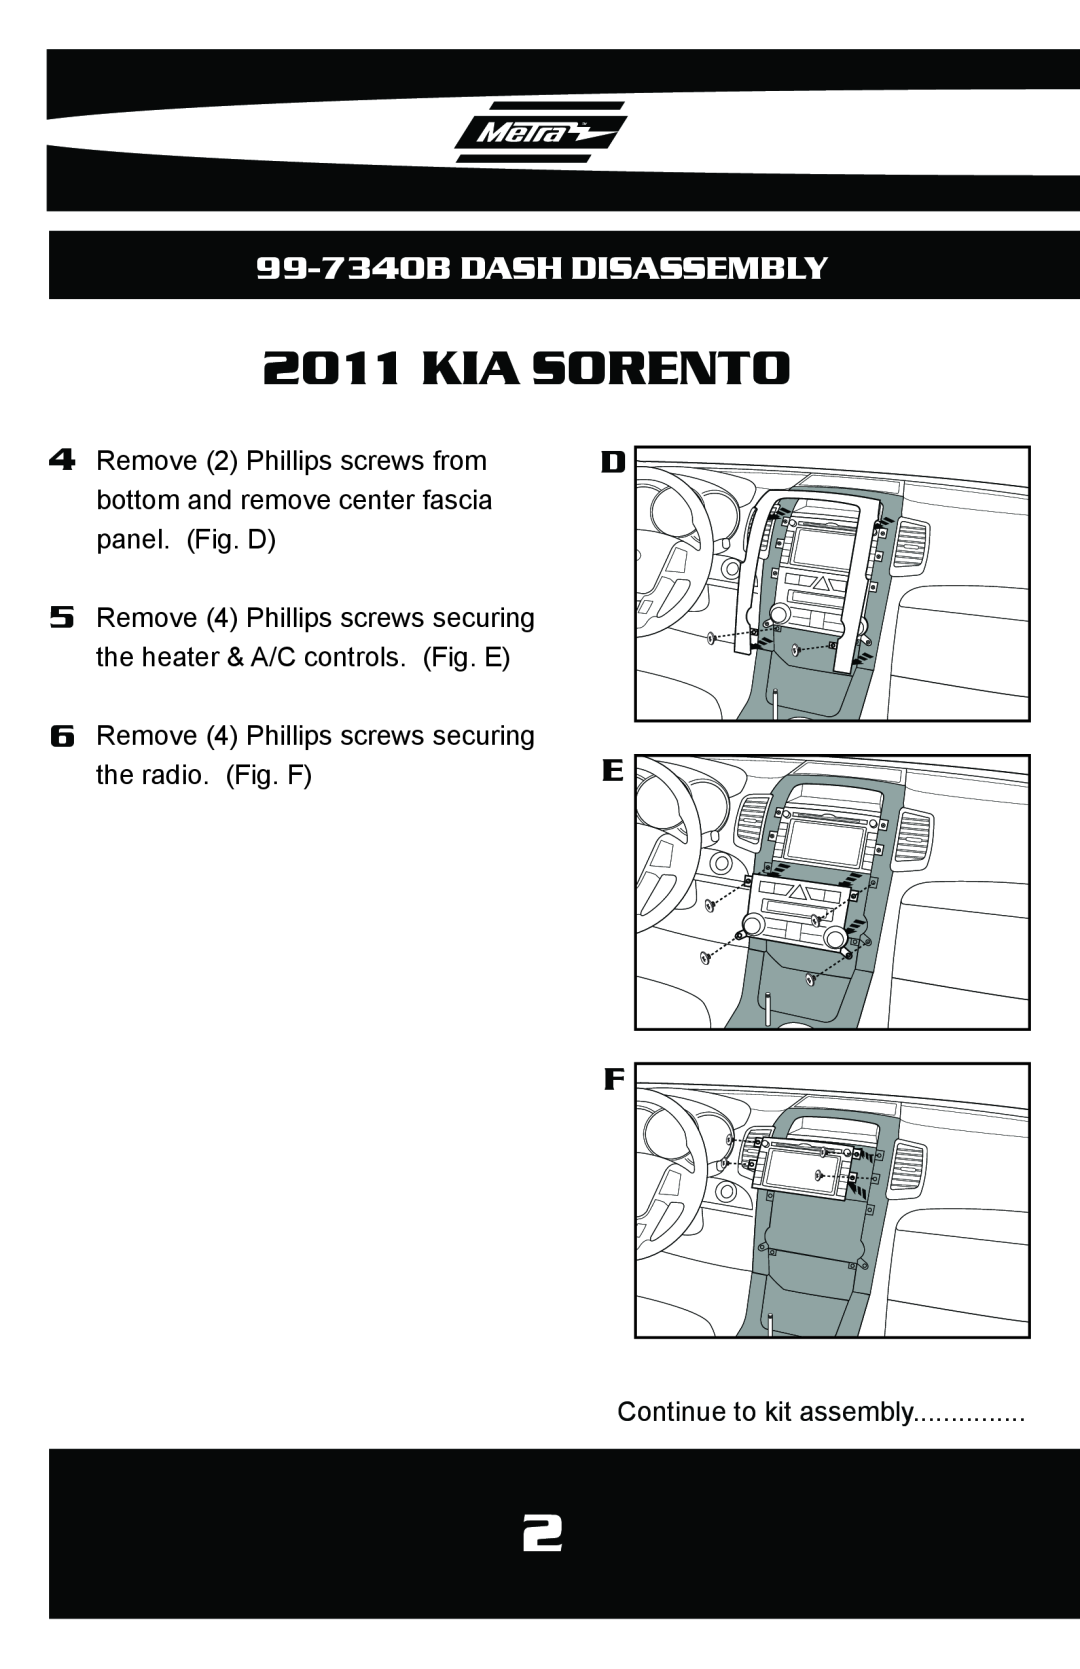 Metra Electronics Kia Sorento, 99-7340B DASH DISASSEMBLY, Remove 4 Phillips screws securing the radio. Fig. F 